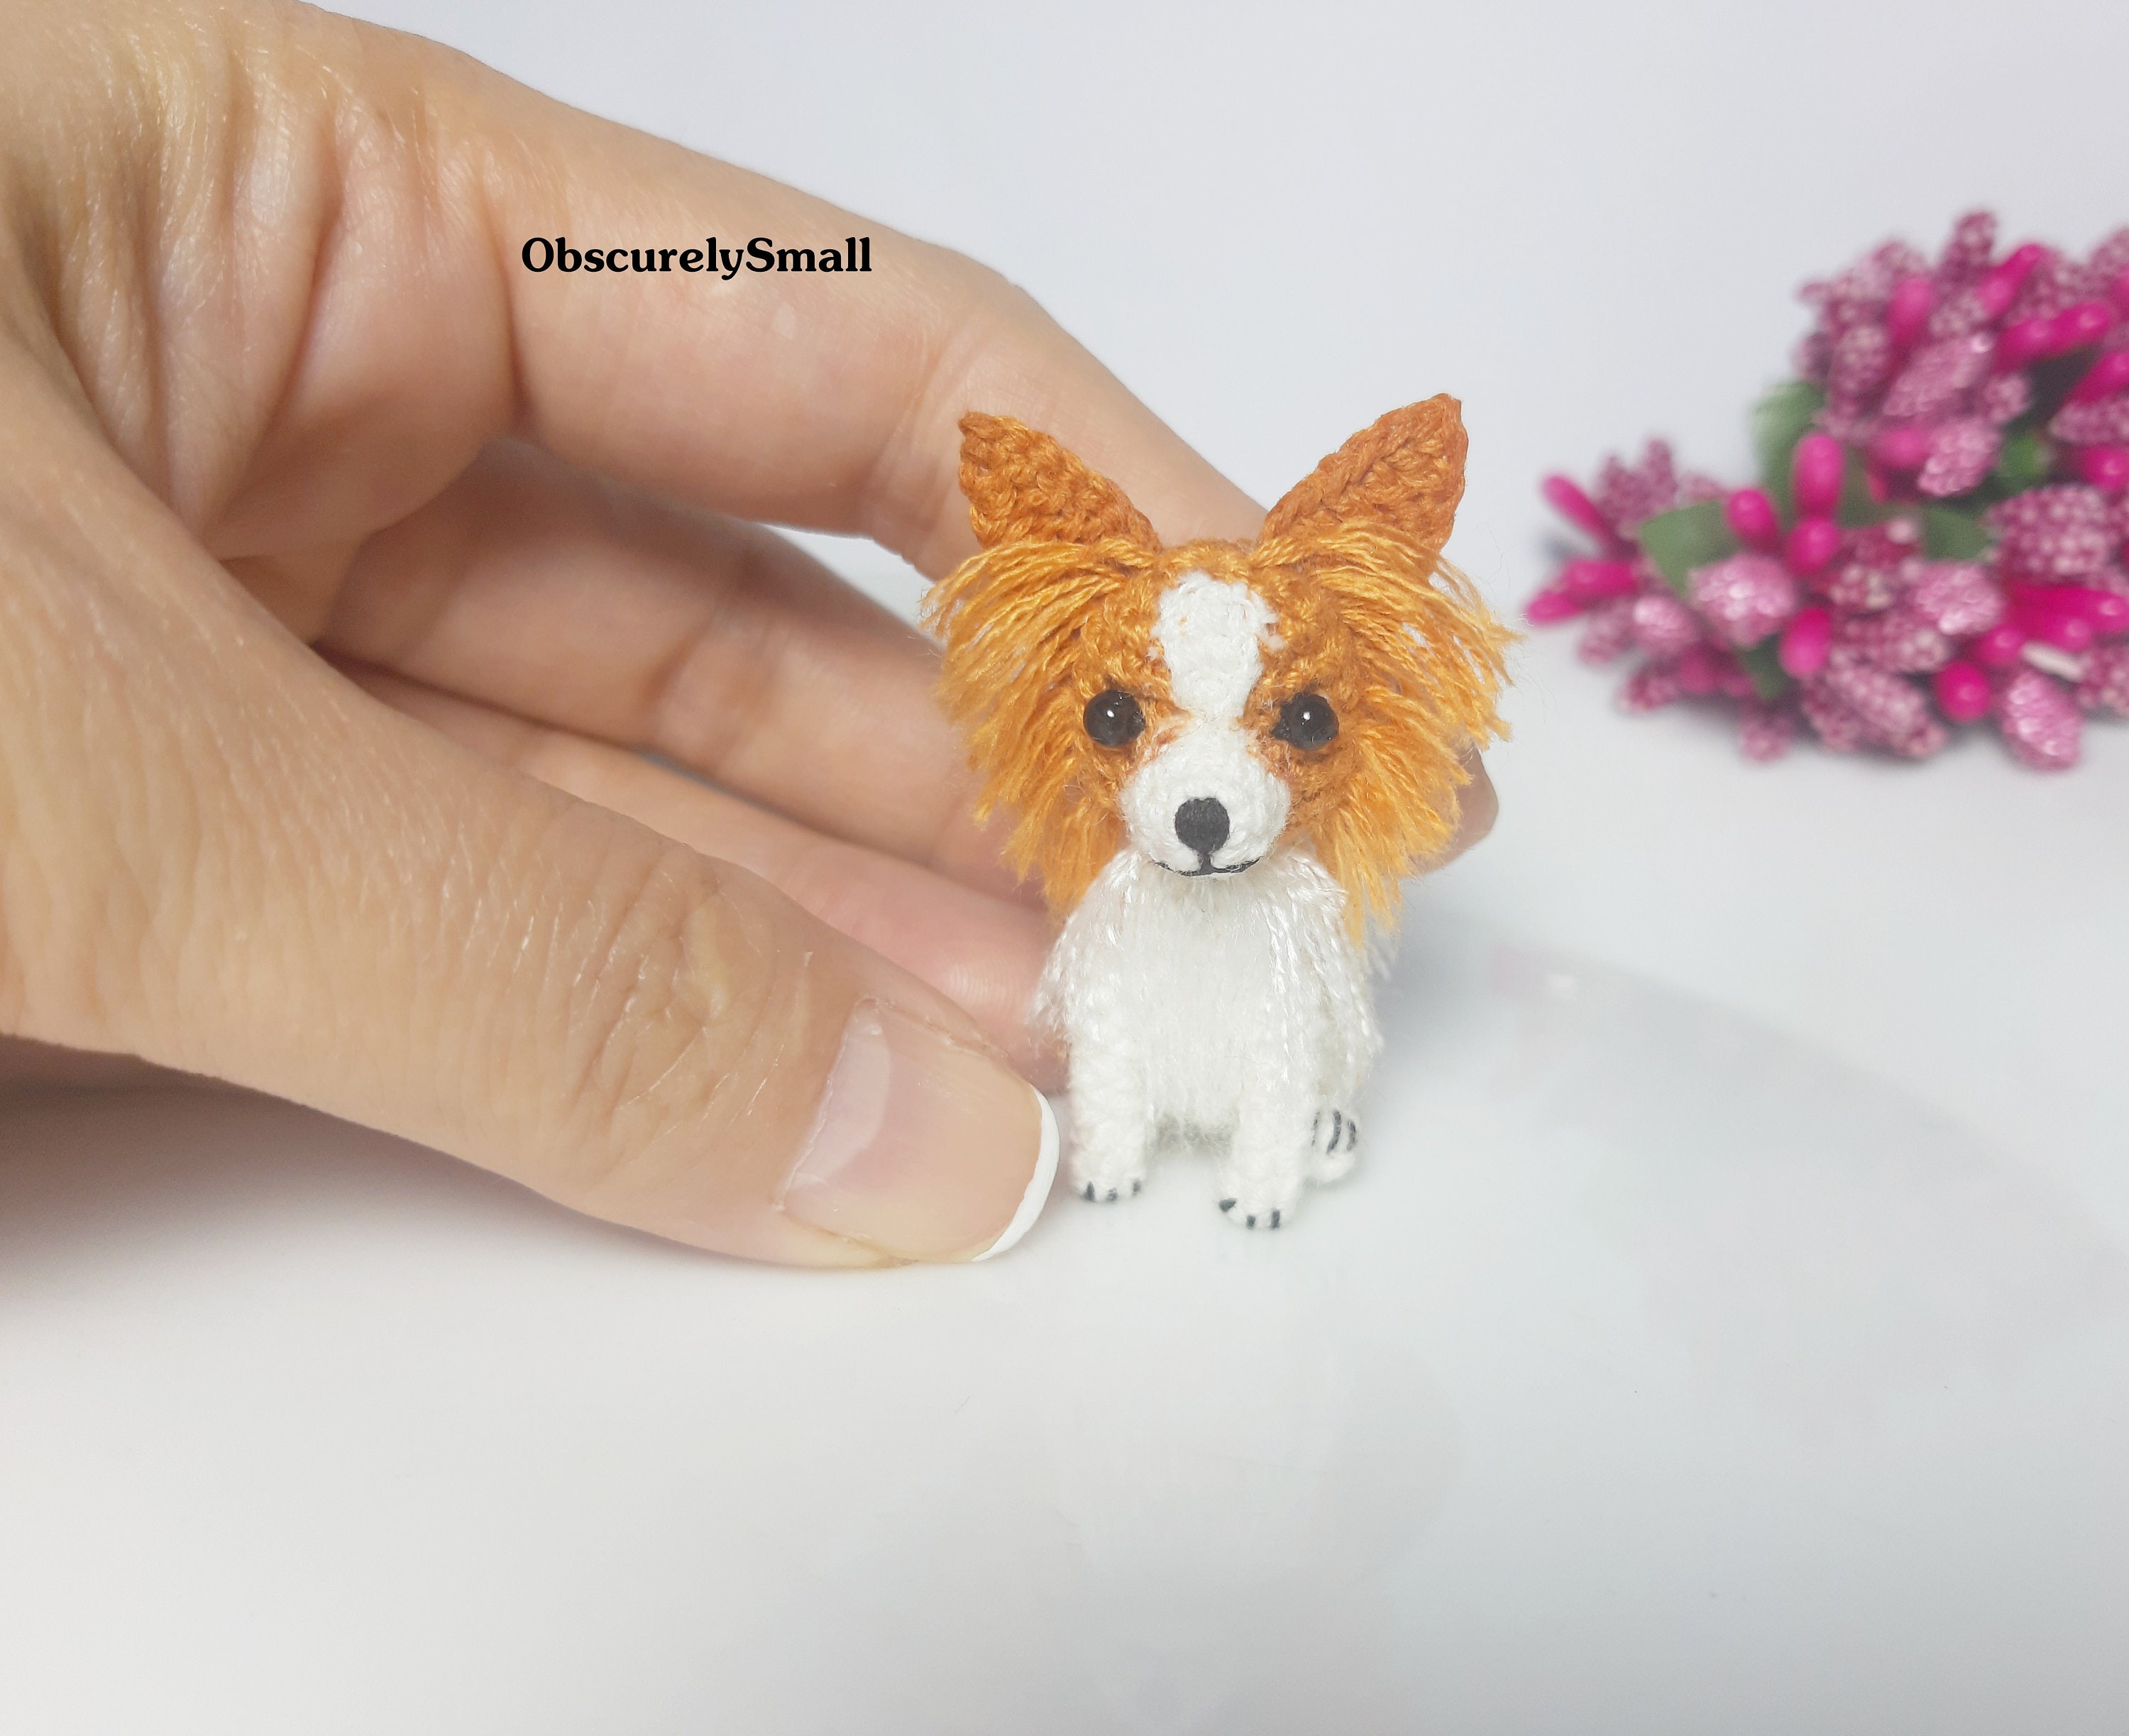 Mini Papillon Dog Tiny Crochet Miniature Dog Stuffed Animals 